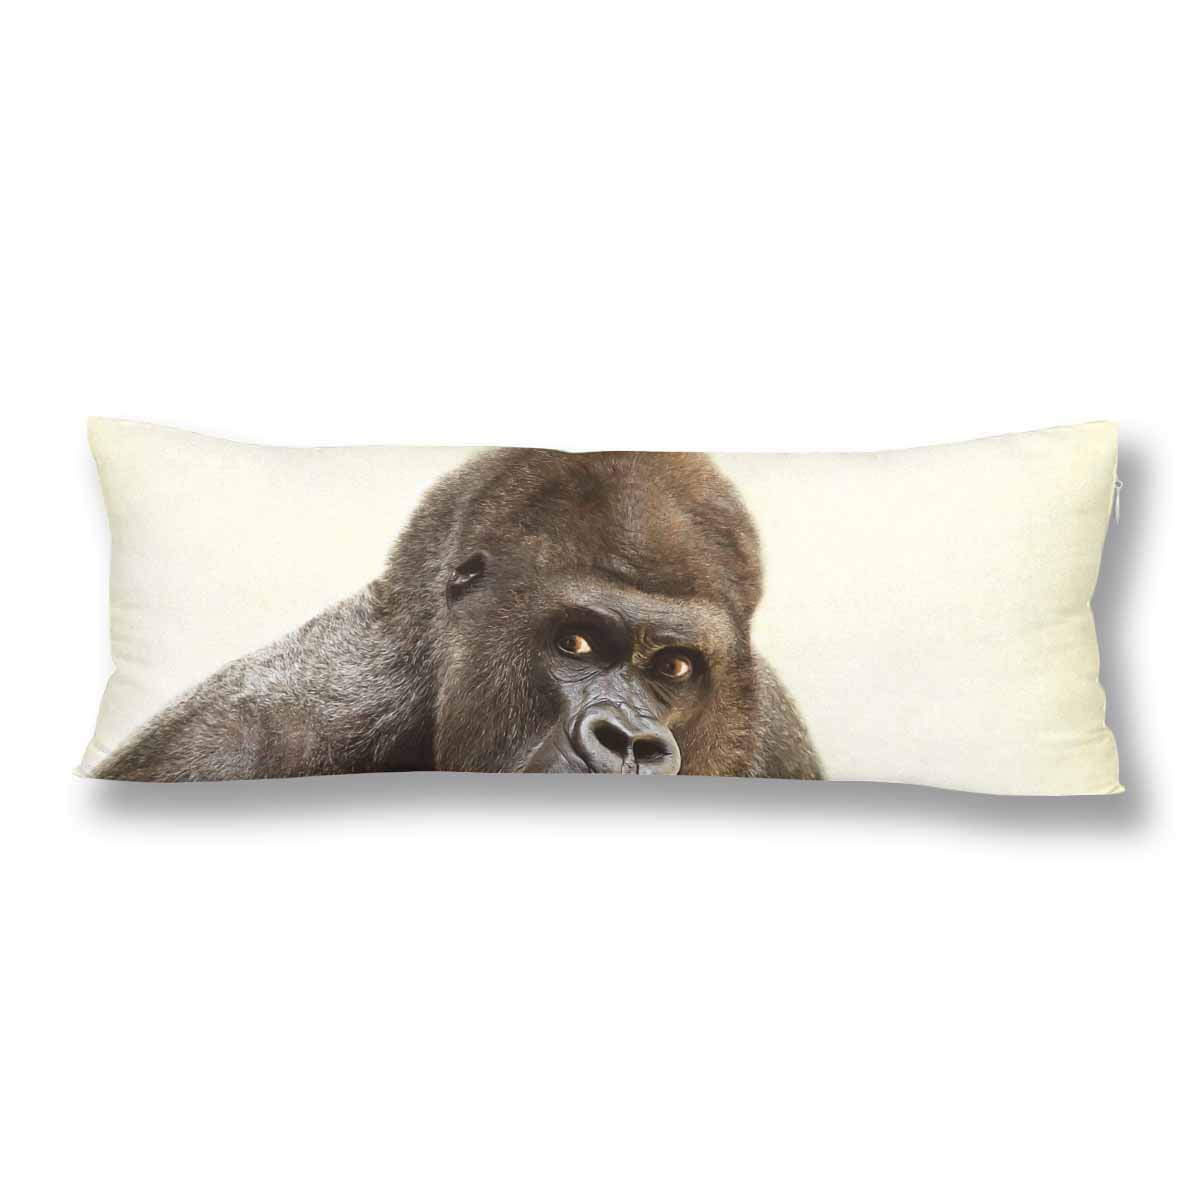 Abphoto Gorilla Body Pillow Covers Pillowcase Throw Pillows 20x60 inch